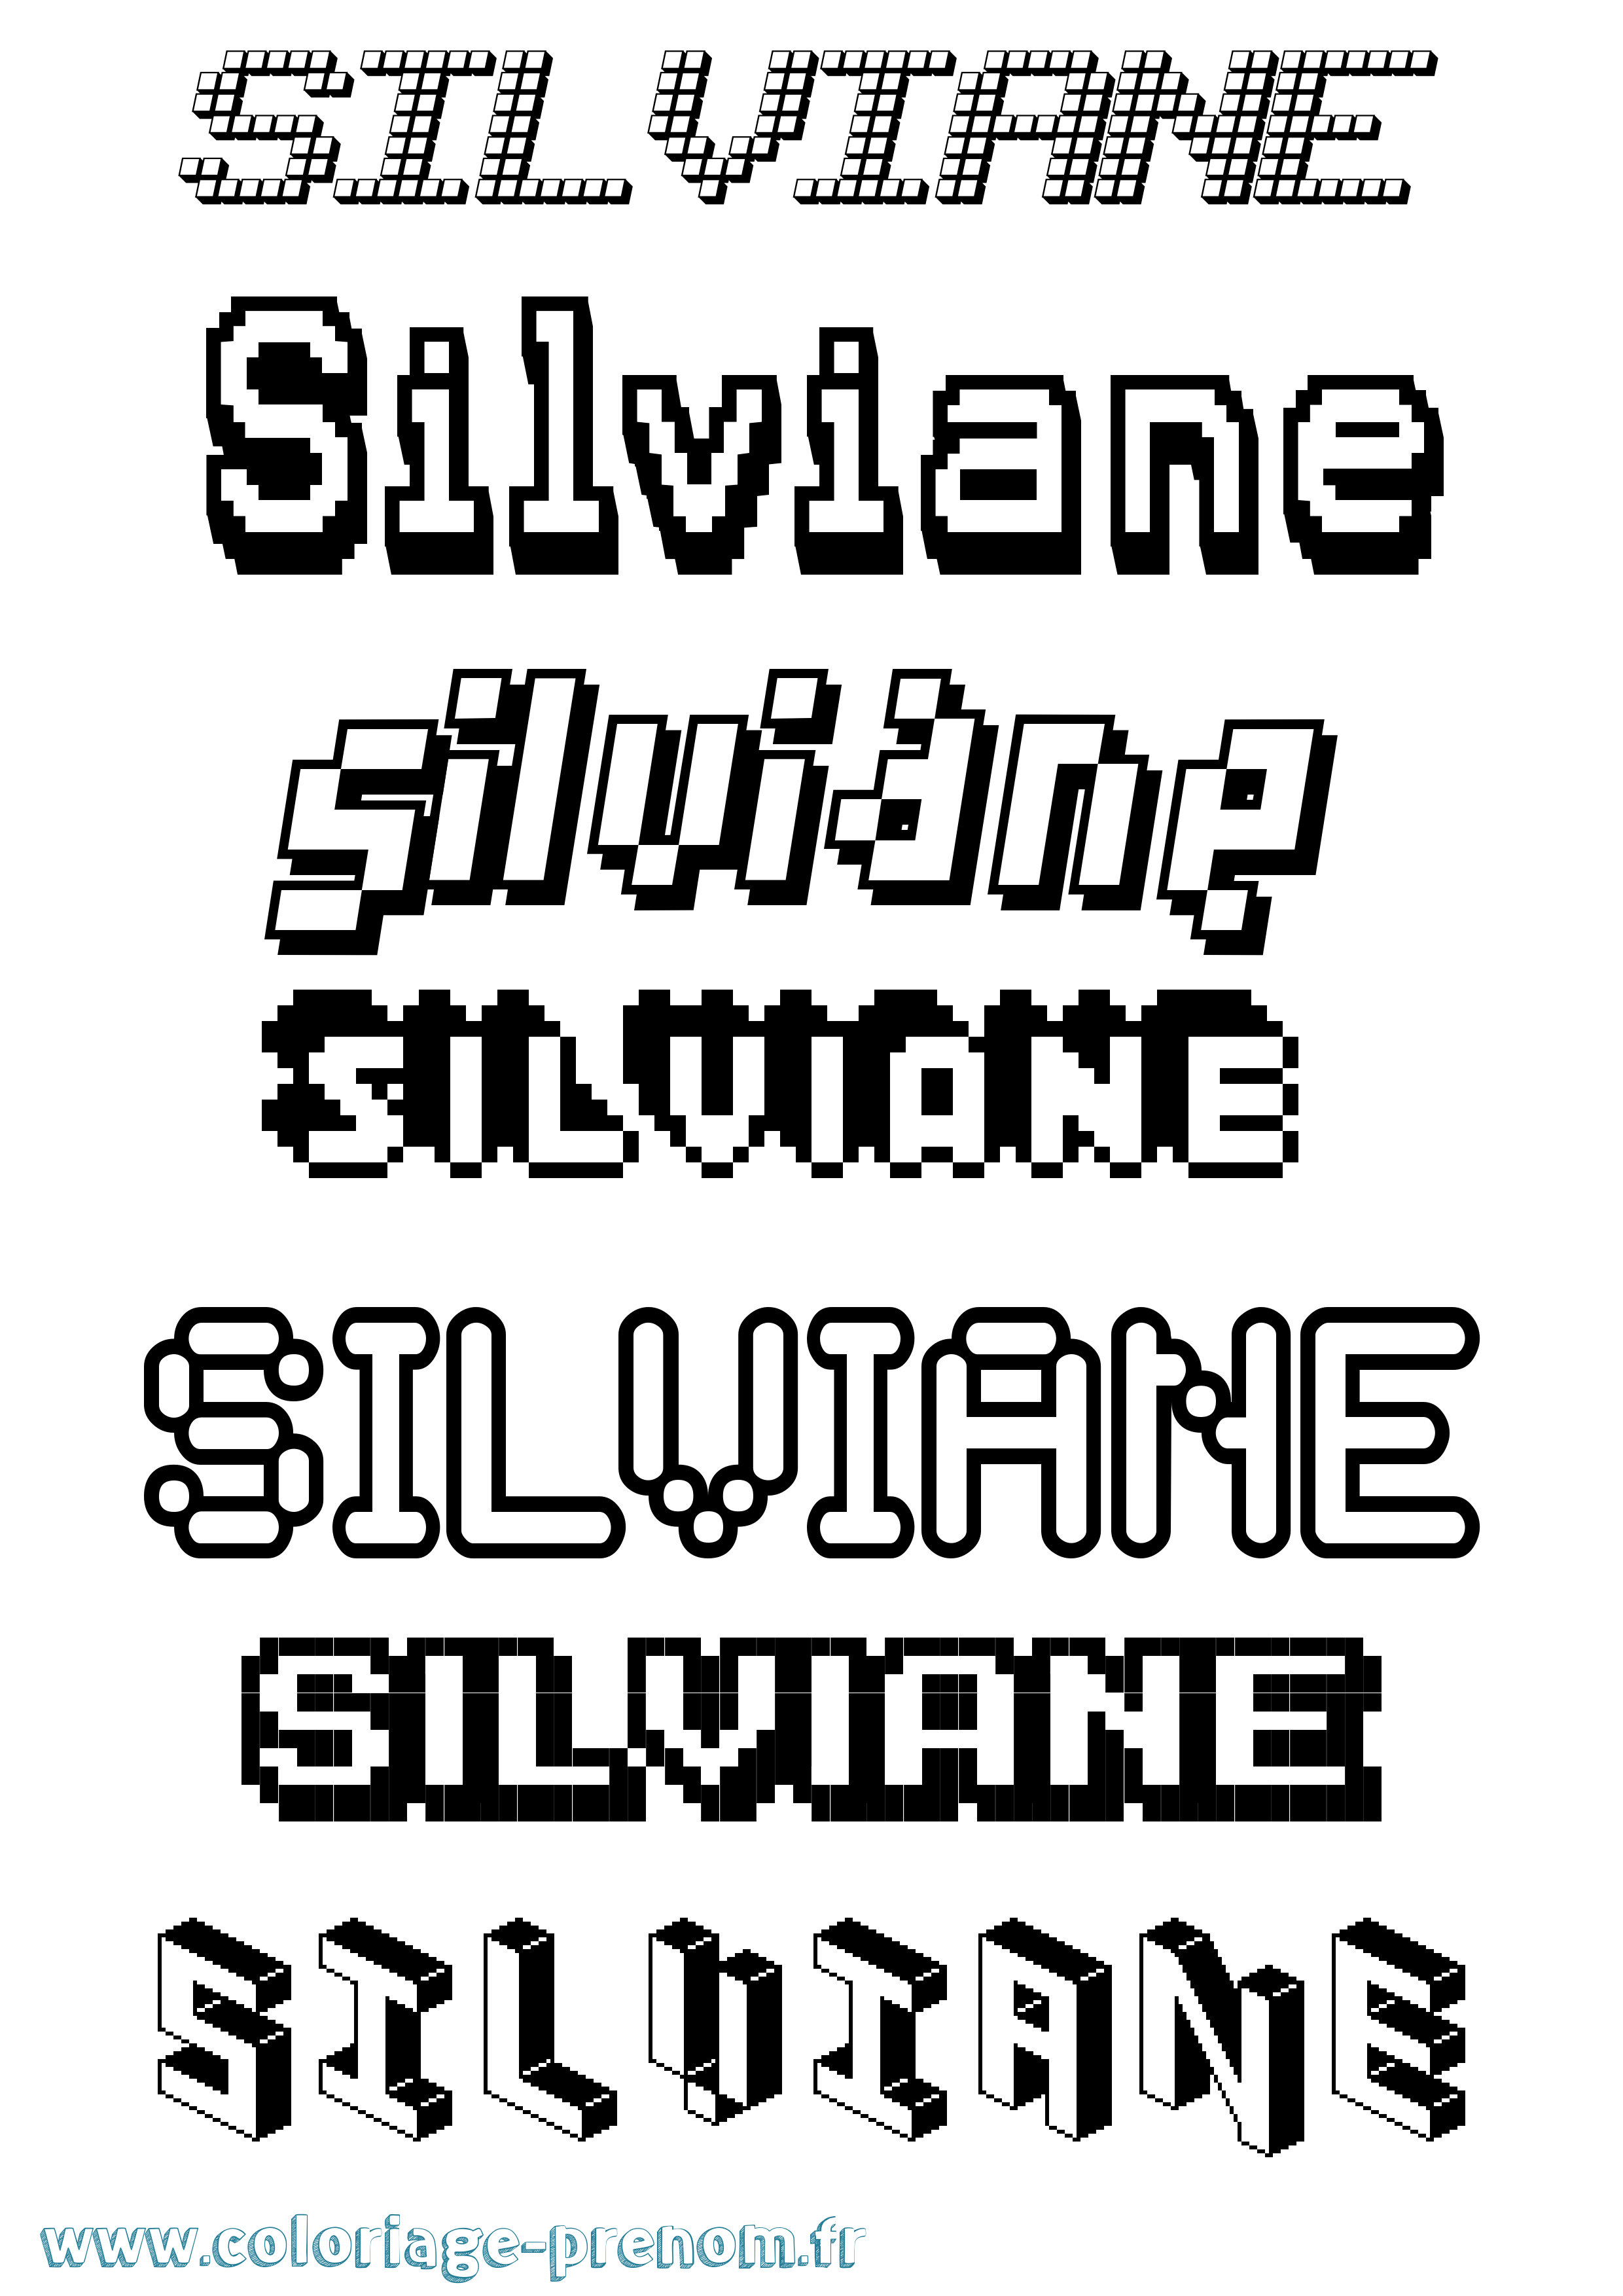 Coloriage prénom Silviane Pixel